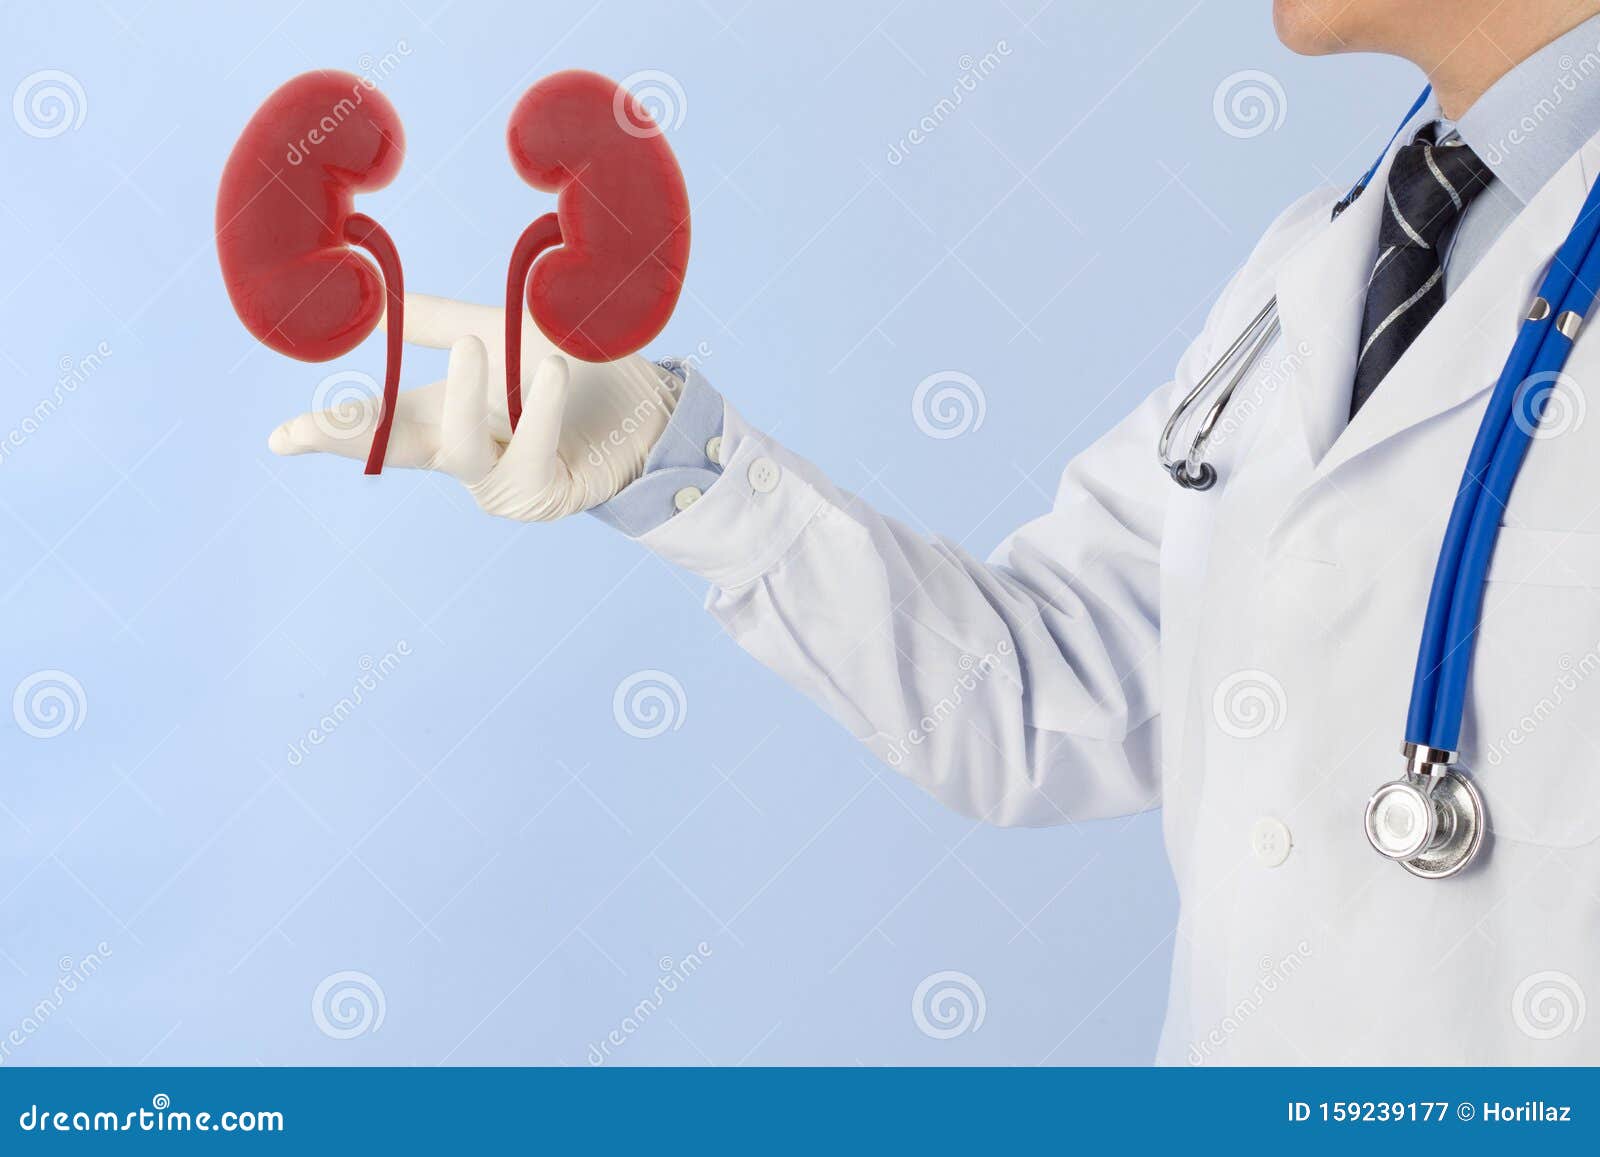 doctor check 3d kidney urology